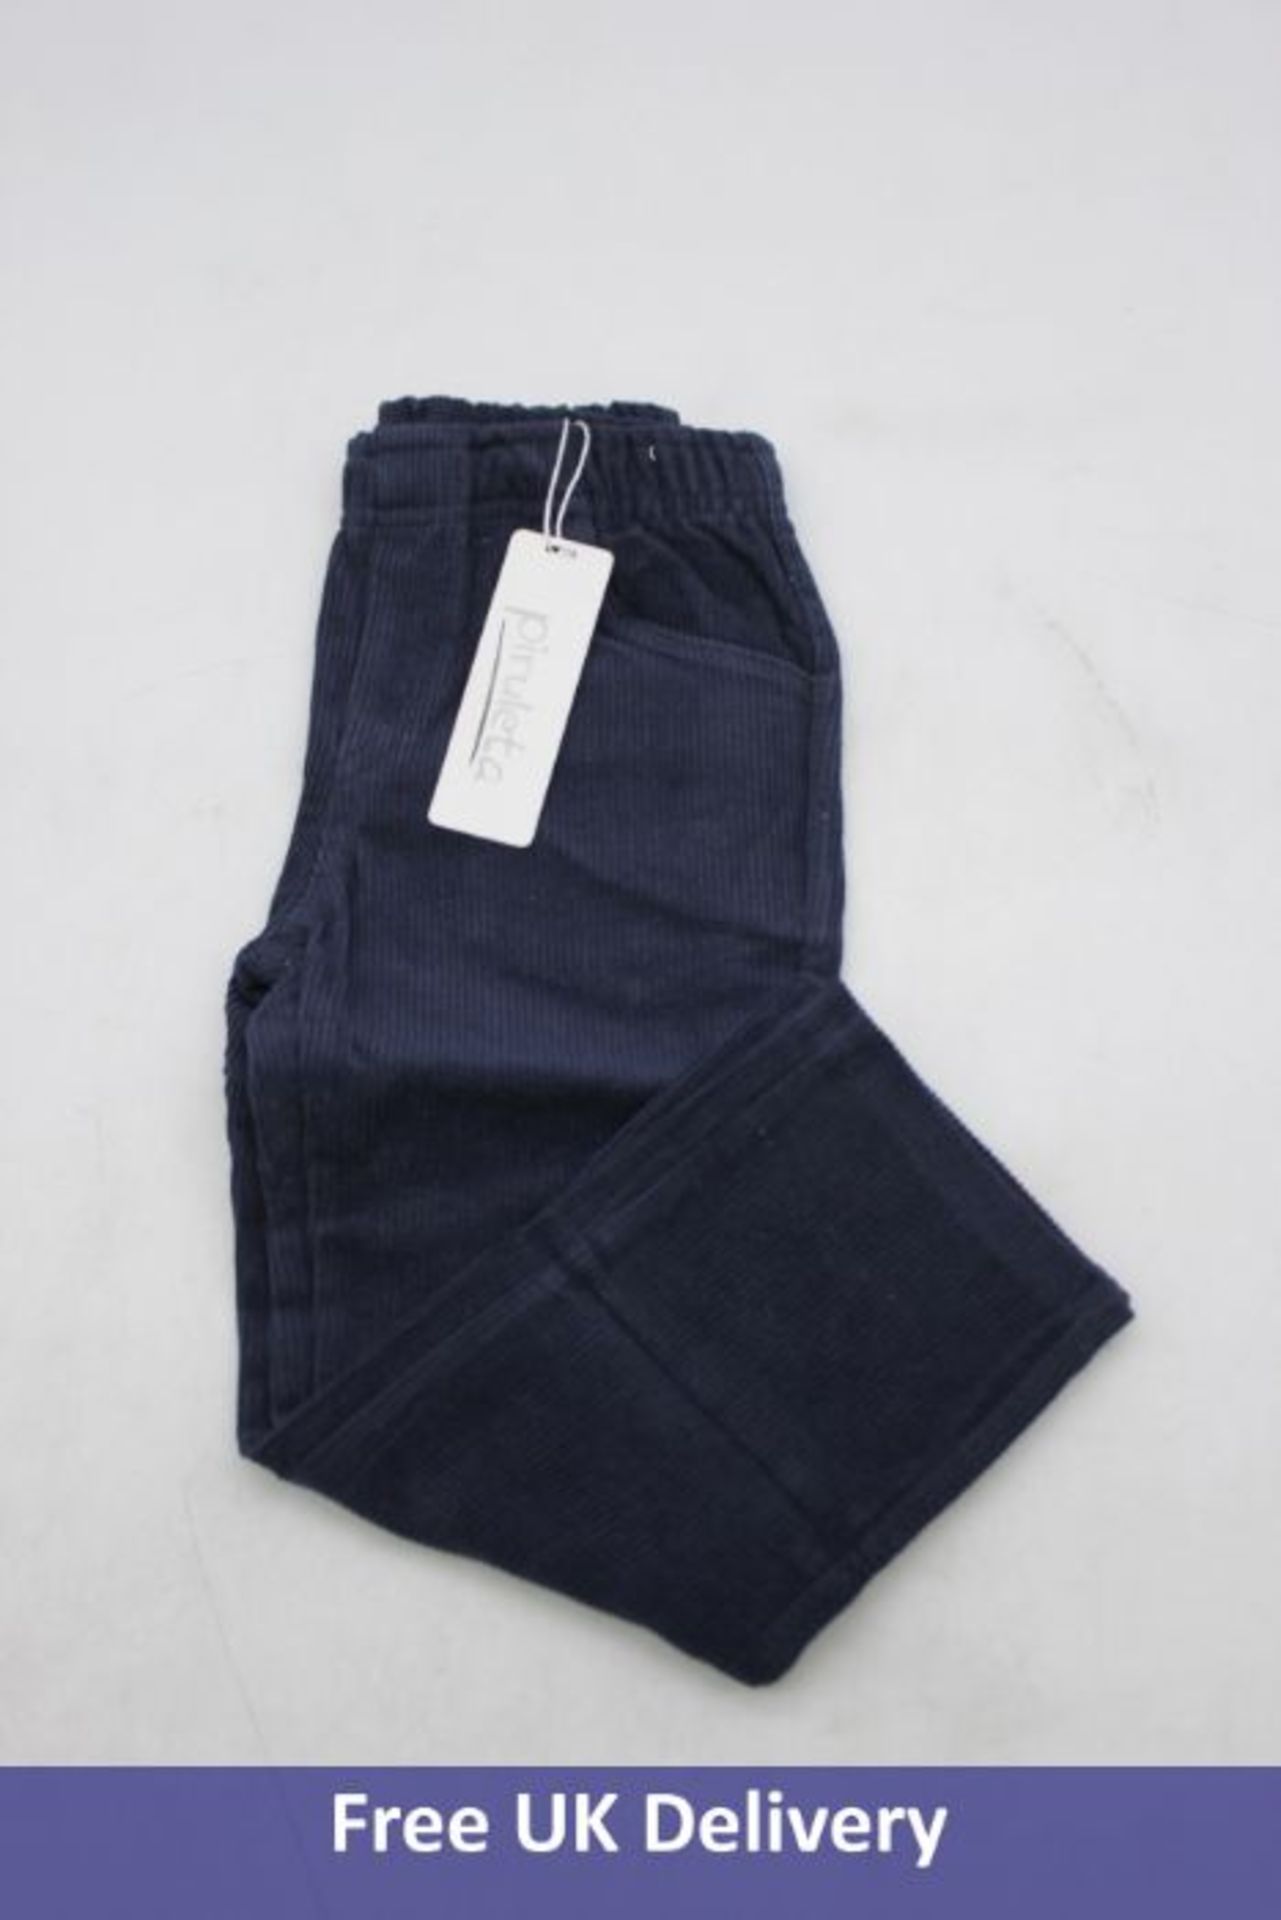 Sixteen Piruleta Soft Children's Trousers, Dark Blue, 6x UK 12 Months, 5x UK 18 Months, 5x UK 2-3 Ye - Image 3 of 3